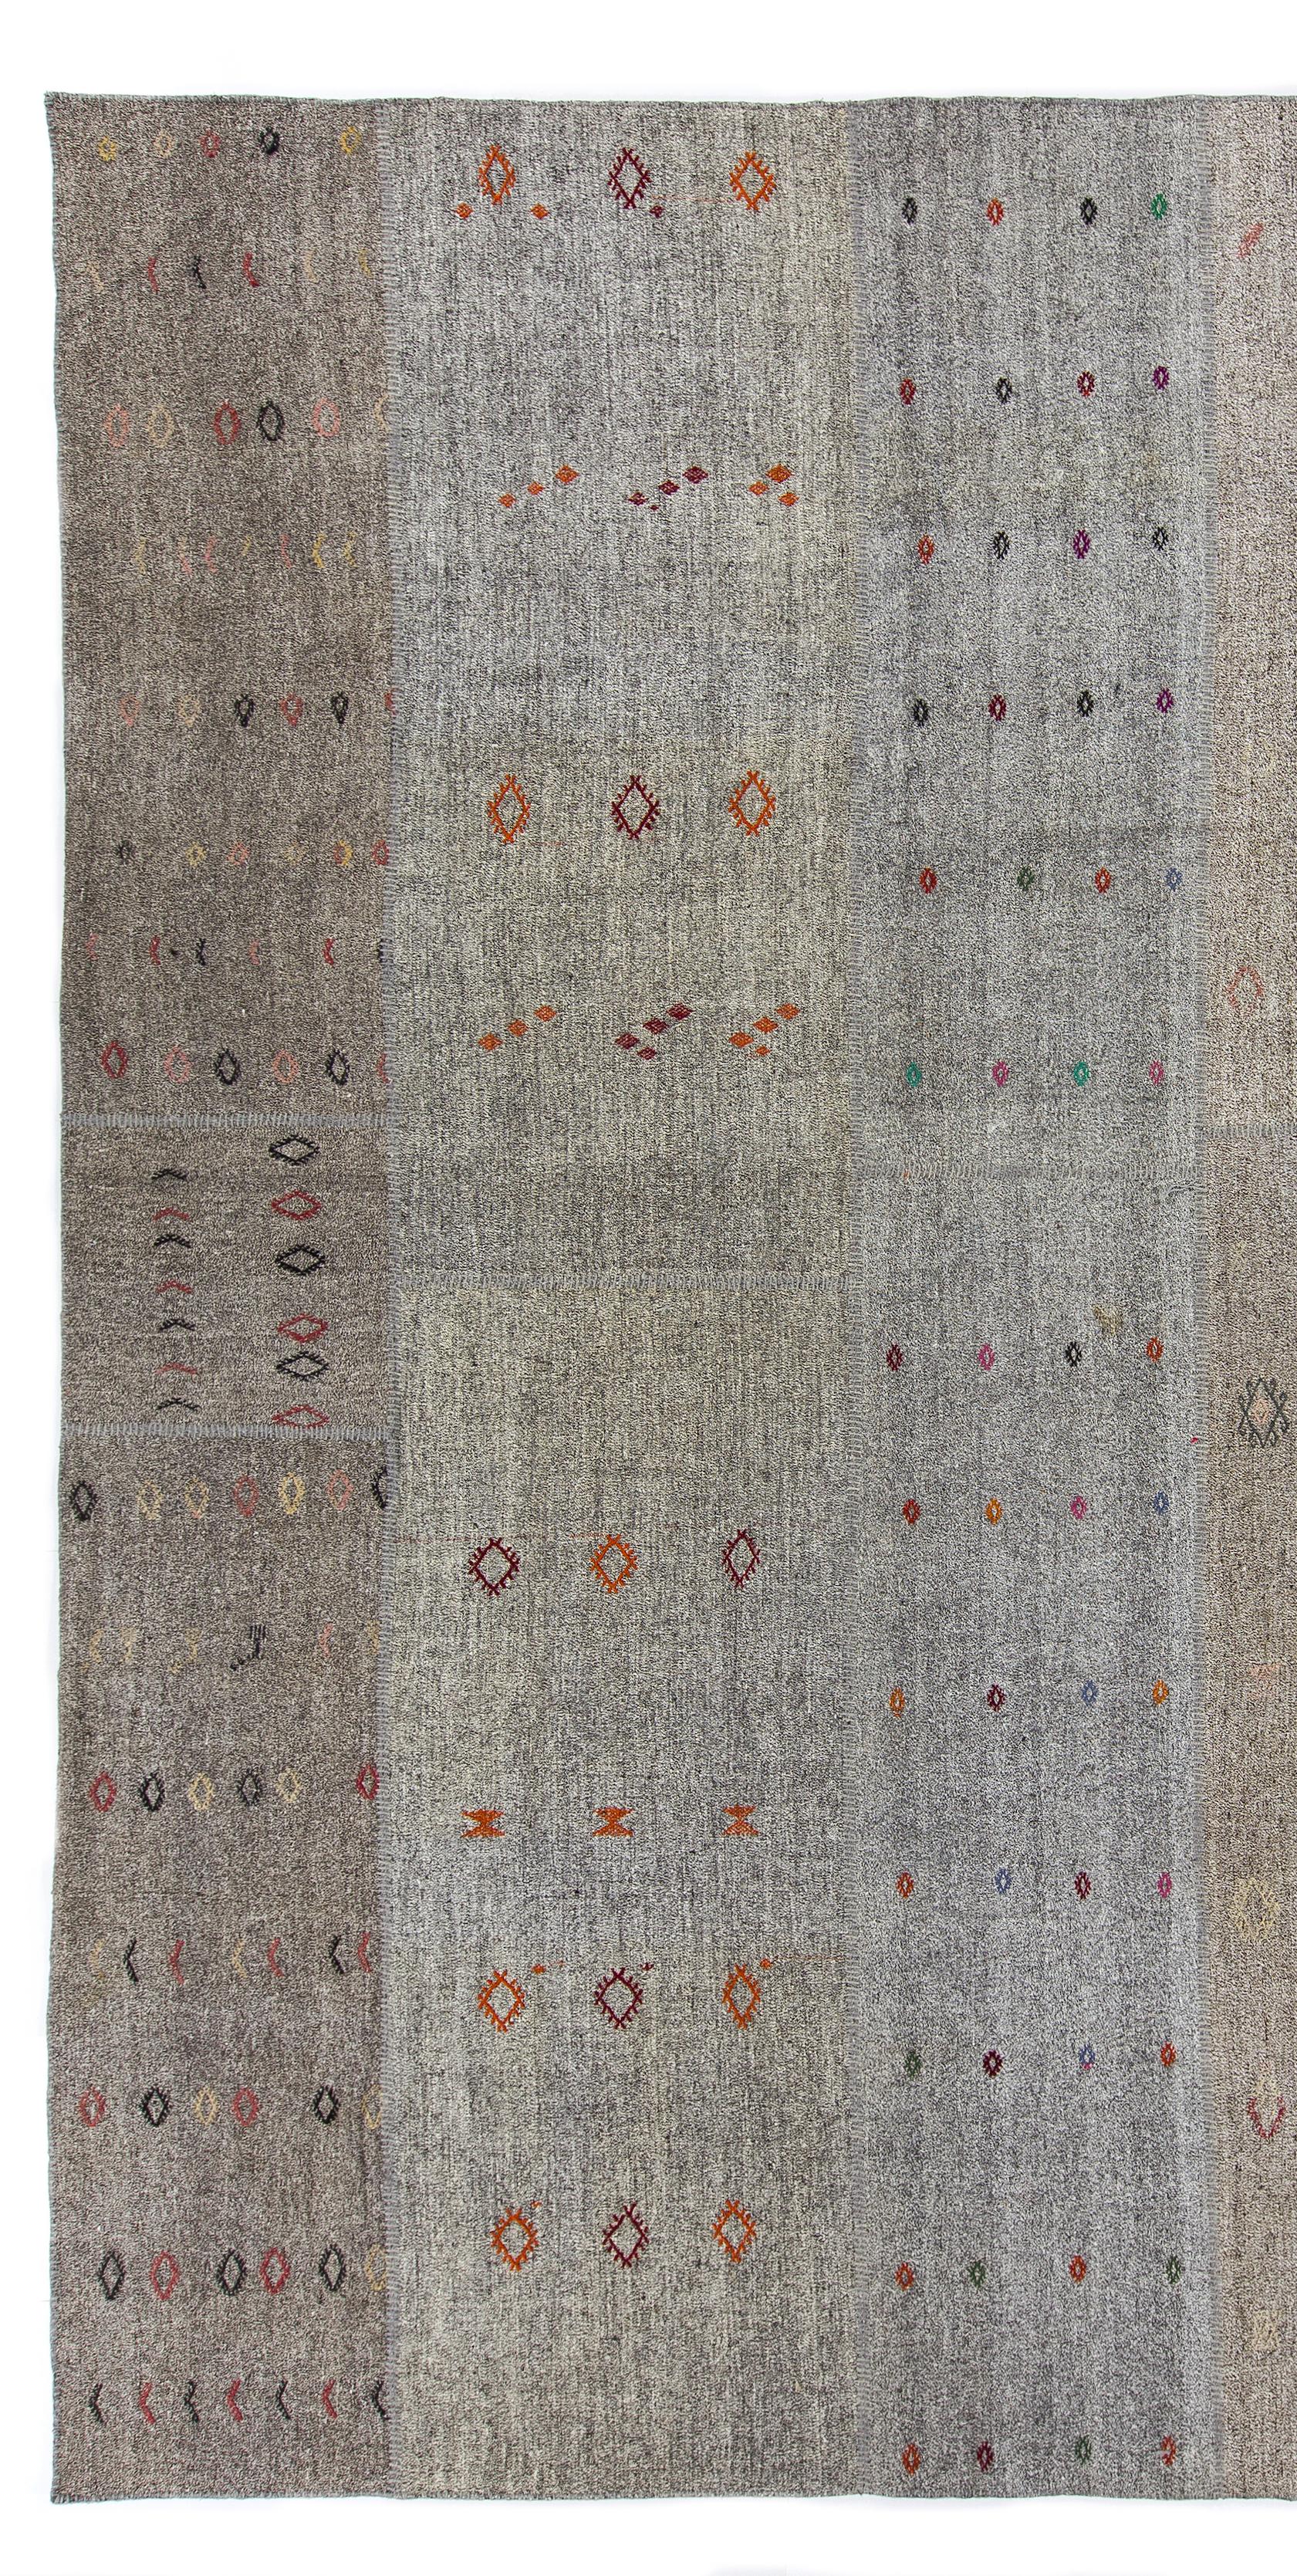 Hand-Woven Vintage Anatolian Kilim Rug, Flat-Weave Floor Covering 1